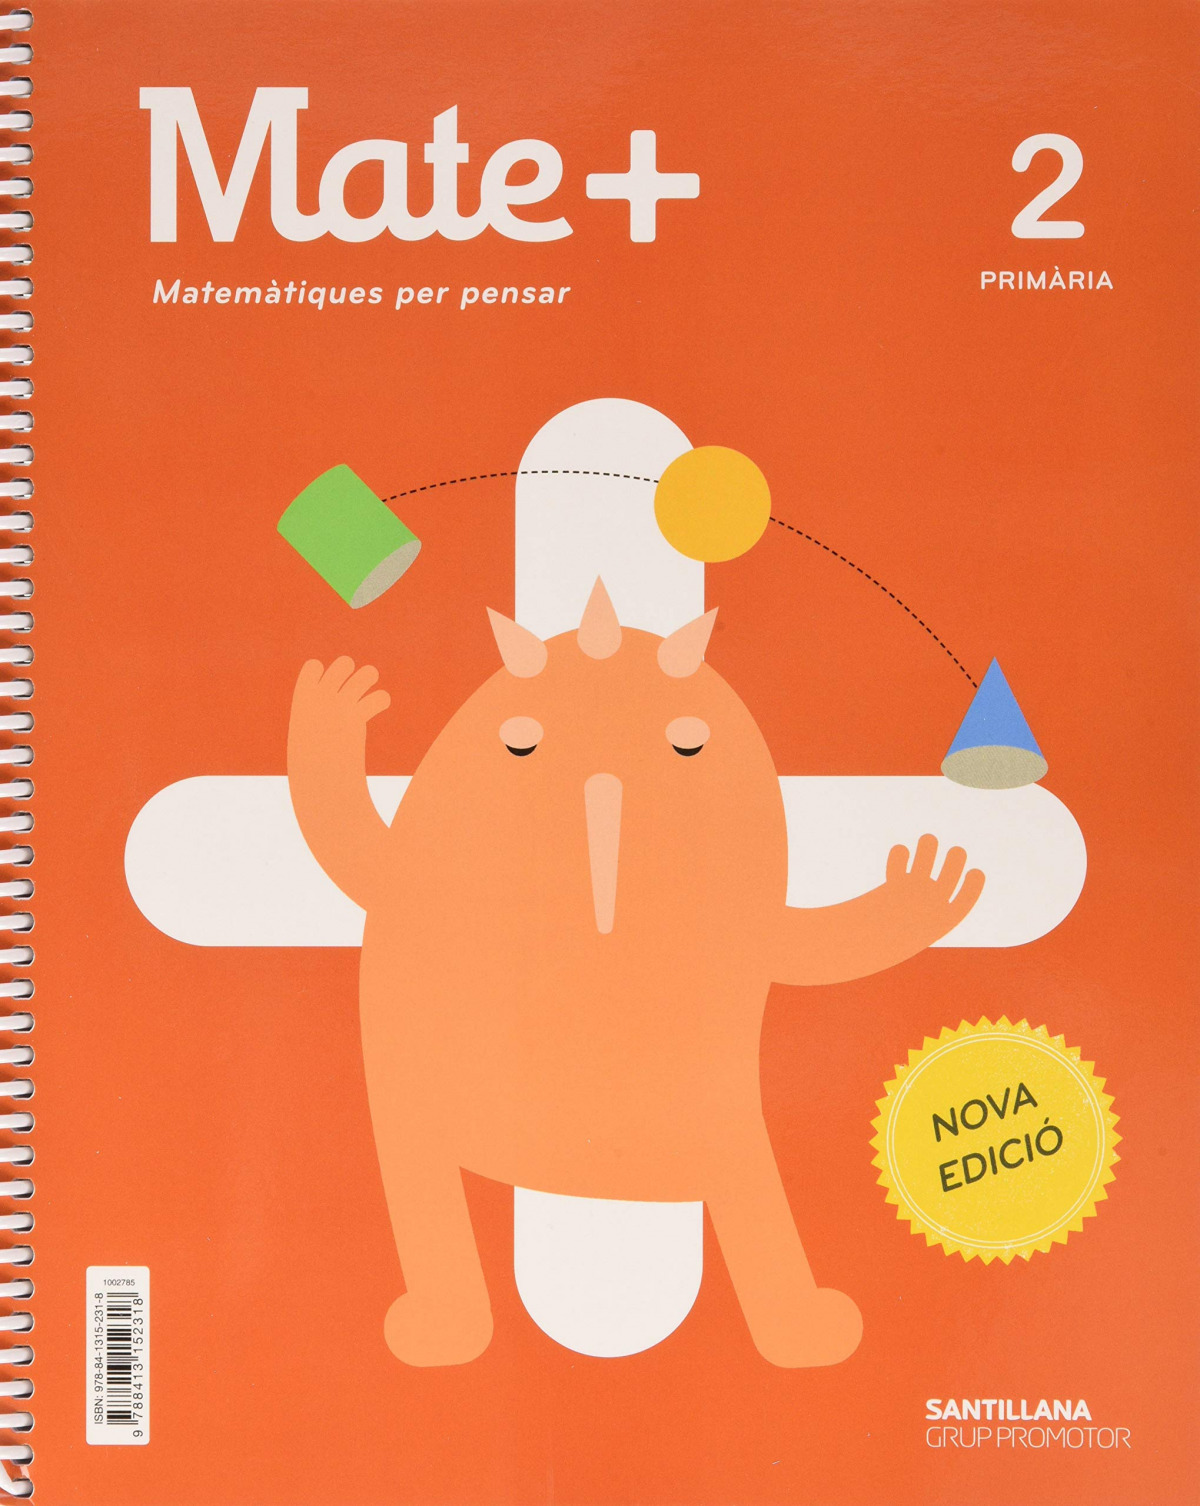 Mate+ matematiques per pensar 2 primaria nova edicio - Varios Autores